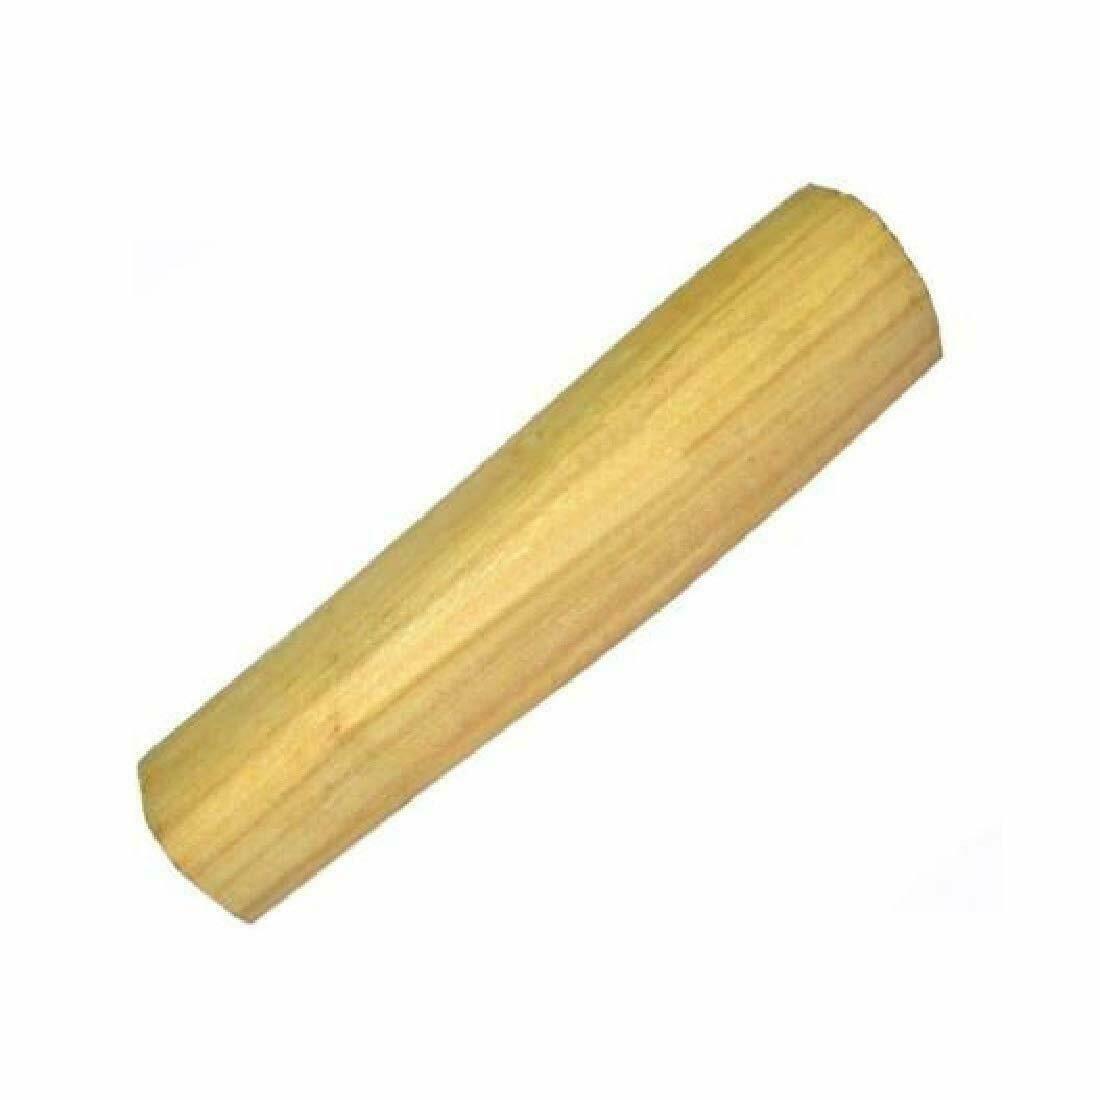 Sandal wood Stick 100% Pure 100 Gms Chandan Ki Lakdi For Skin and Spiritual Use